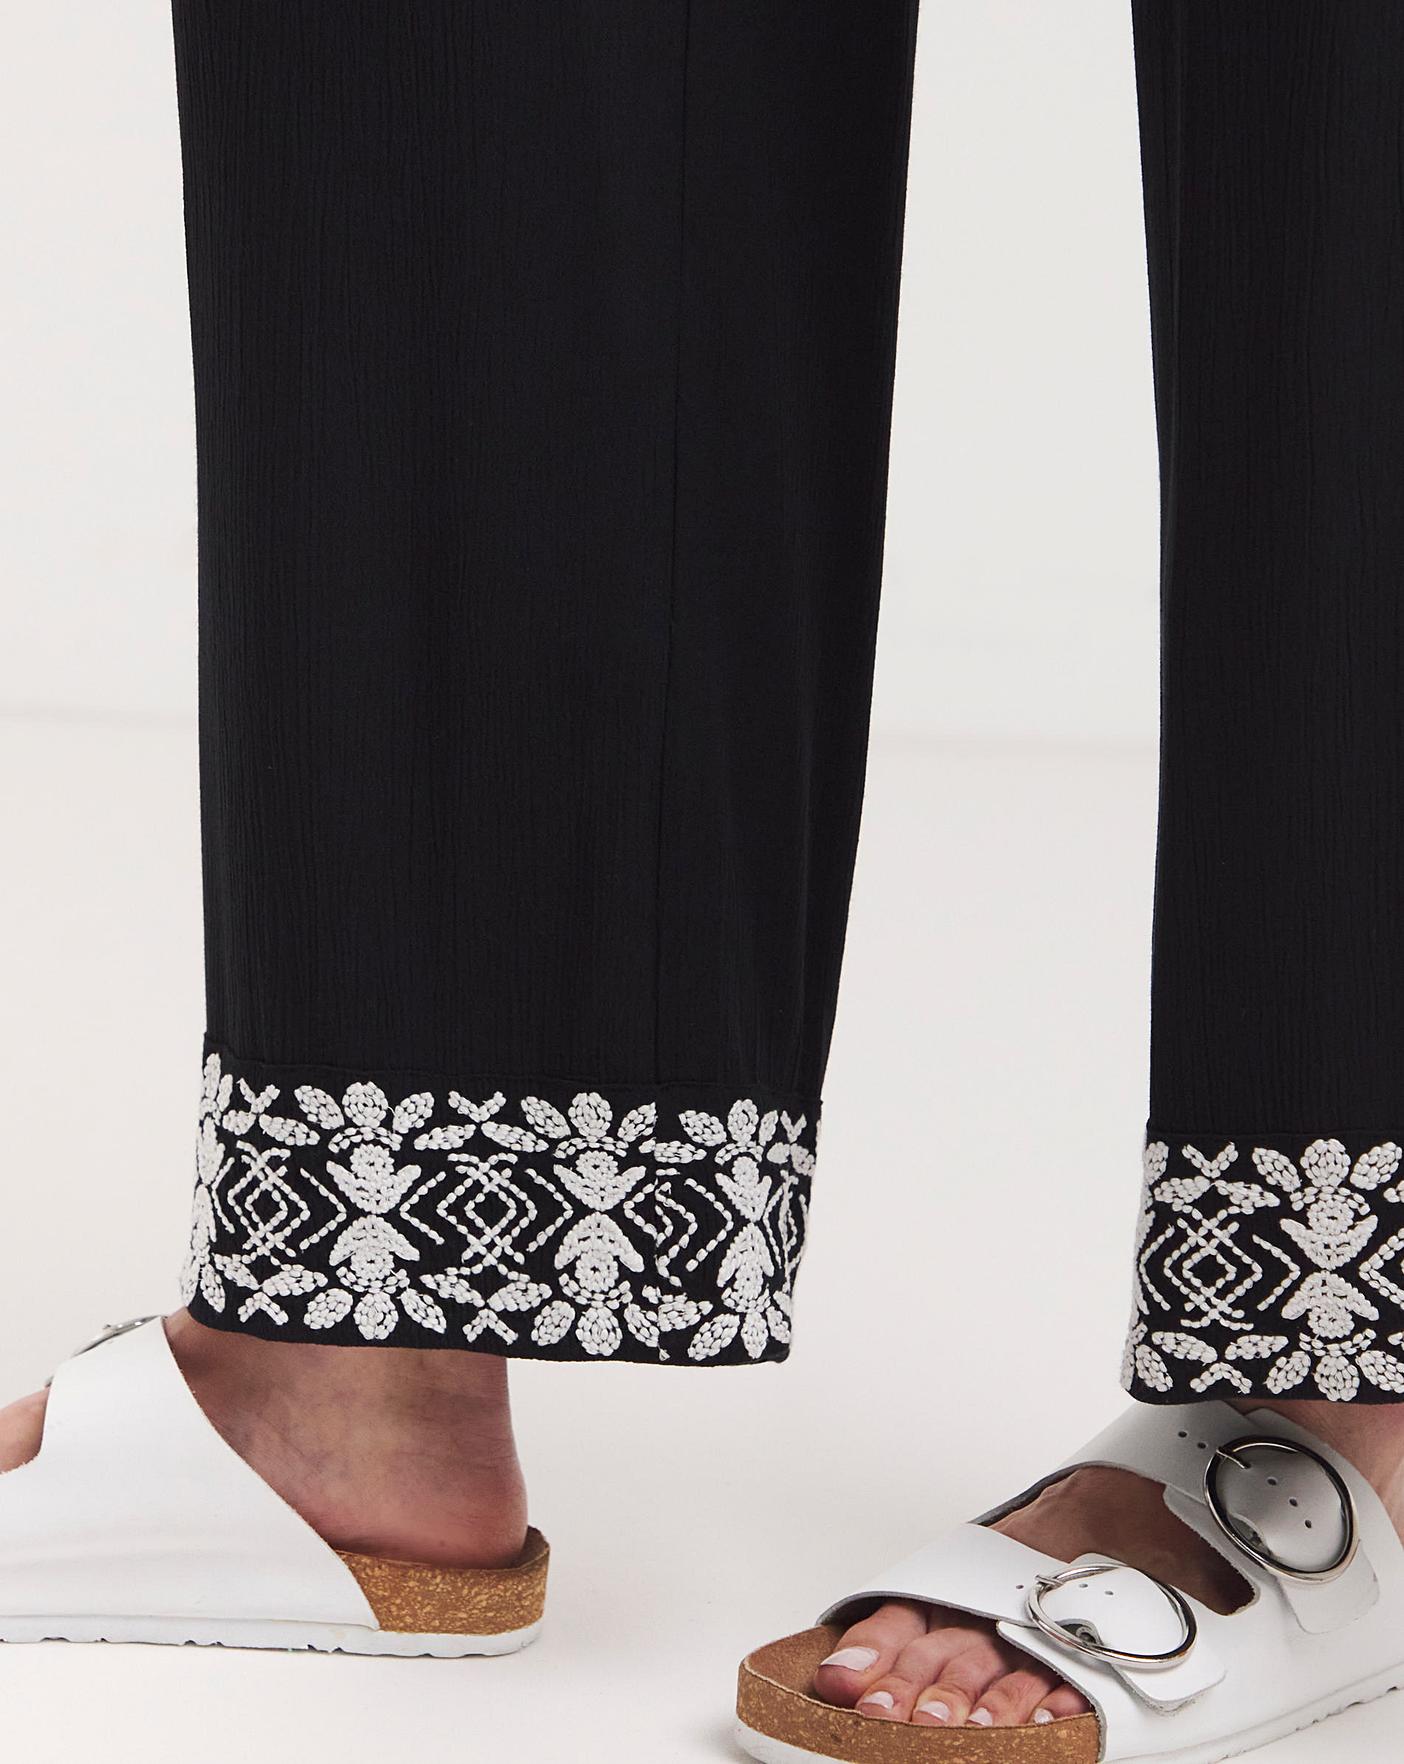 Stylish Plazo Pants/Trousers/ Gharara Pants Designs For Gi… | Flickr